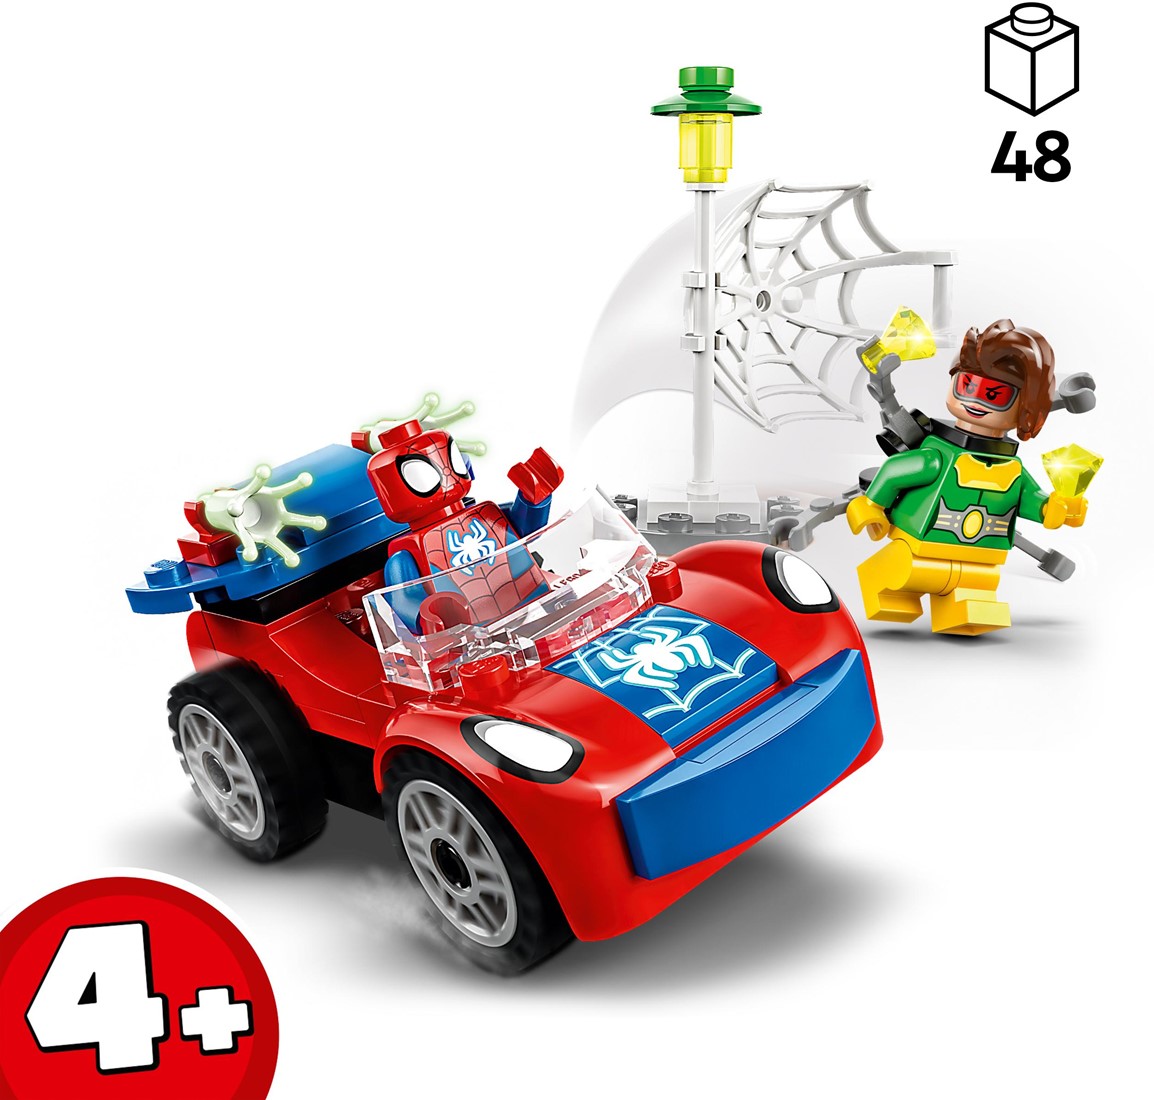 LEGO SPIDEY - La voiture de Spider-Man et Doc Ock 10789